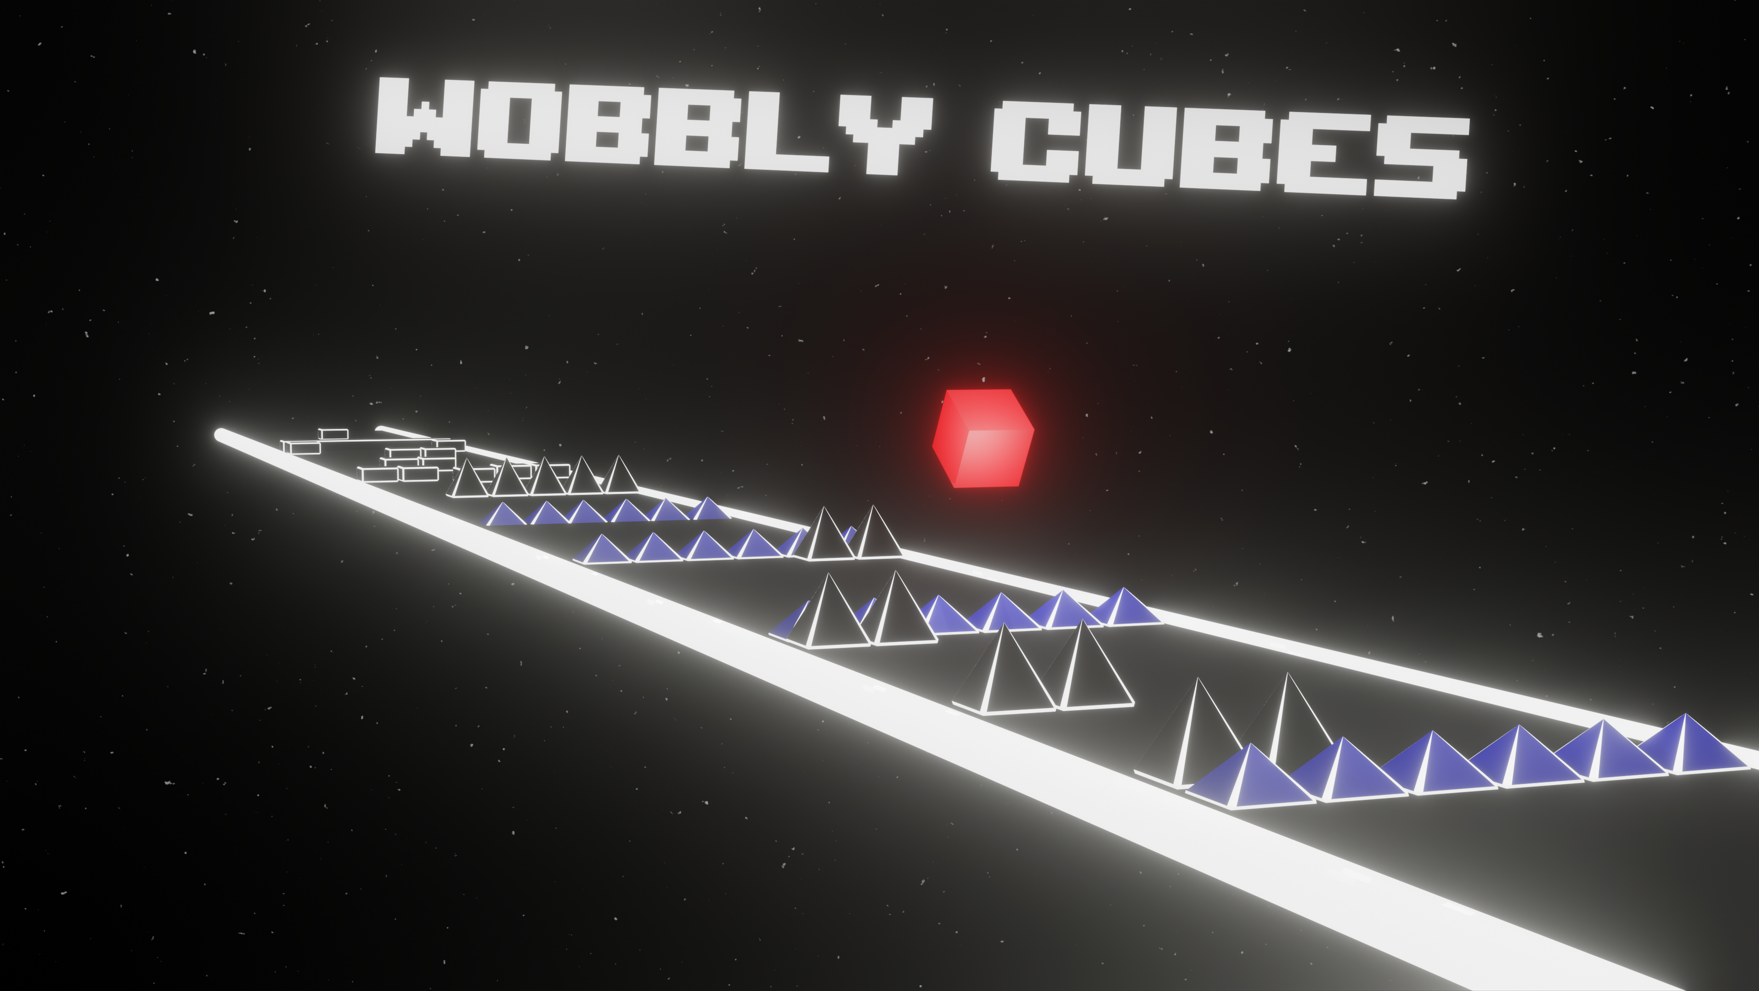 Wobbly Cubes